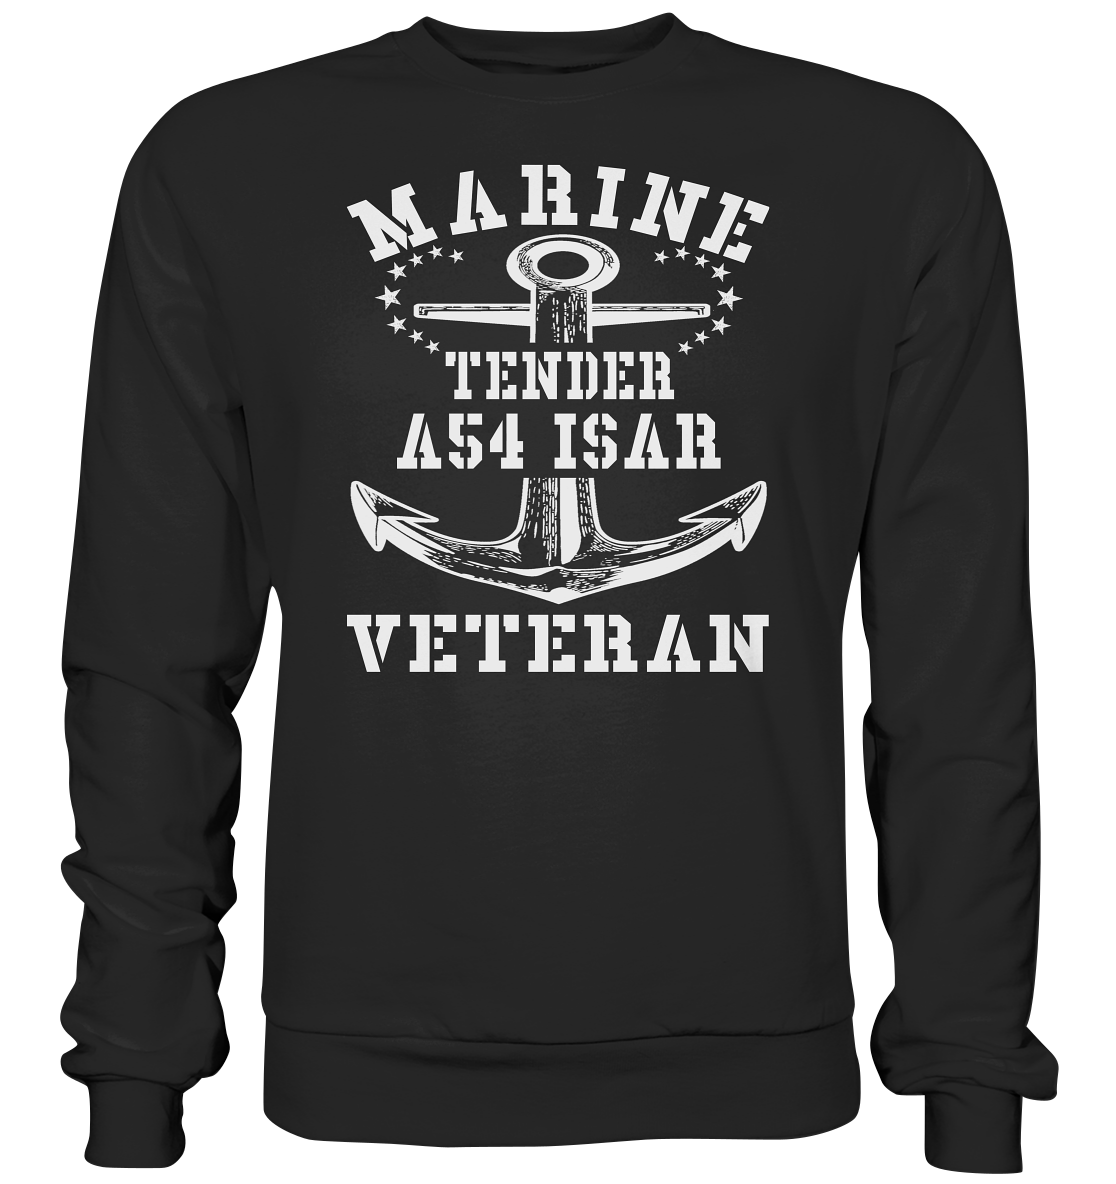 Tender A54 ISAR Marine Veteran  - Premium Sweatshirt